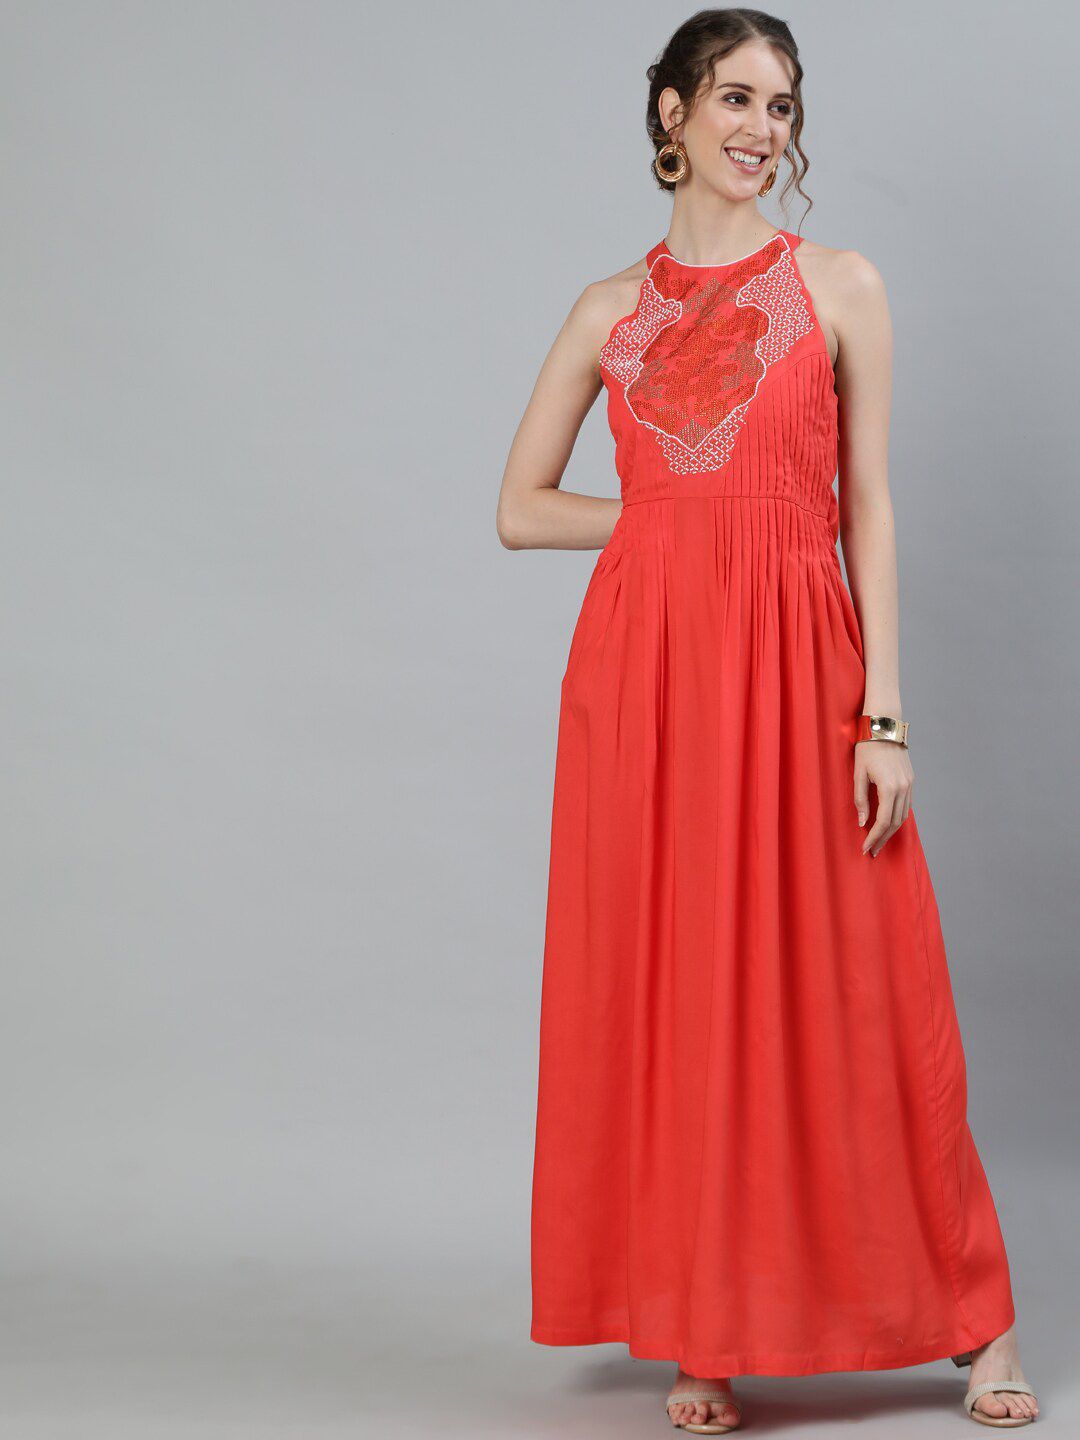 Ishin Peach-Coloured Maxi Dress Price in India